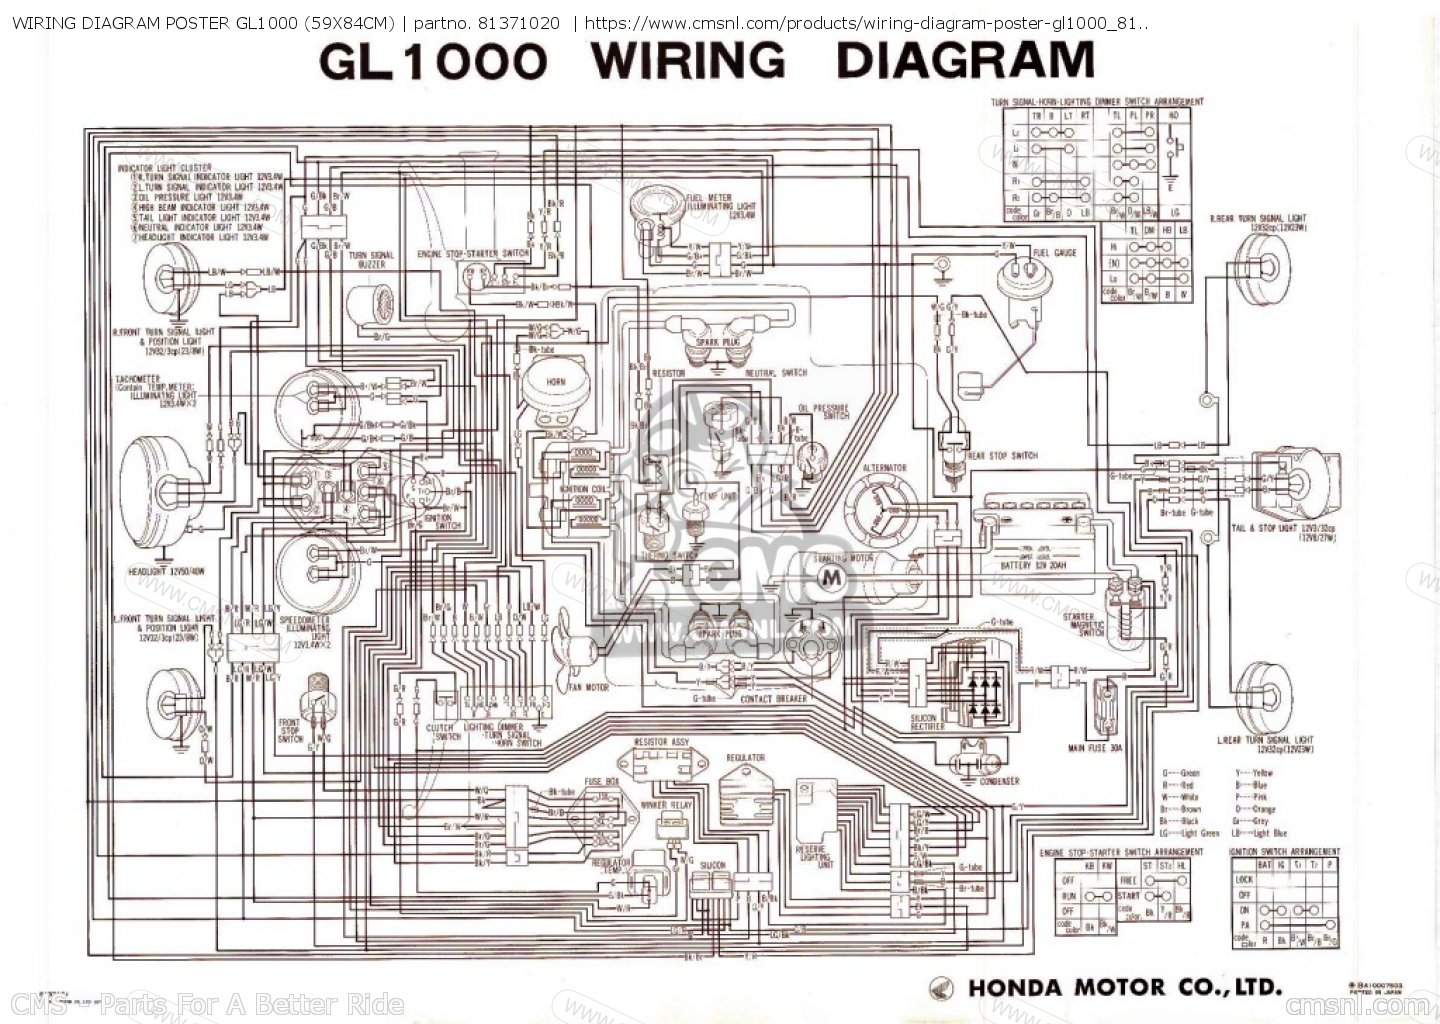 Honda Cb360 Wiring Diagram from images.cmsnl.com